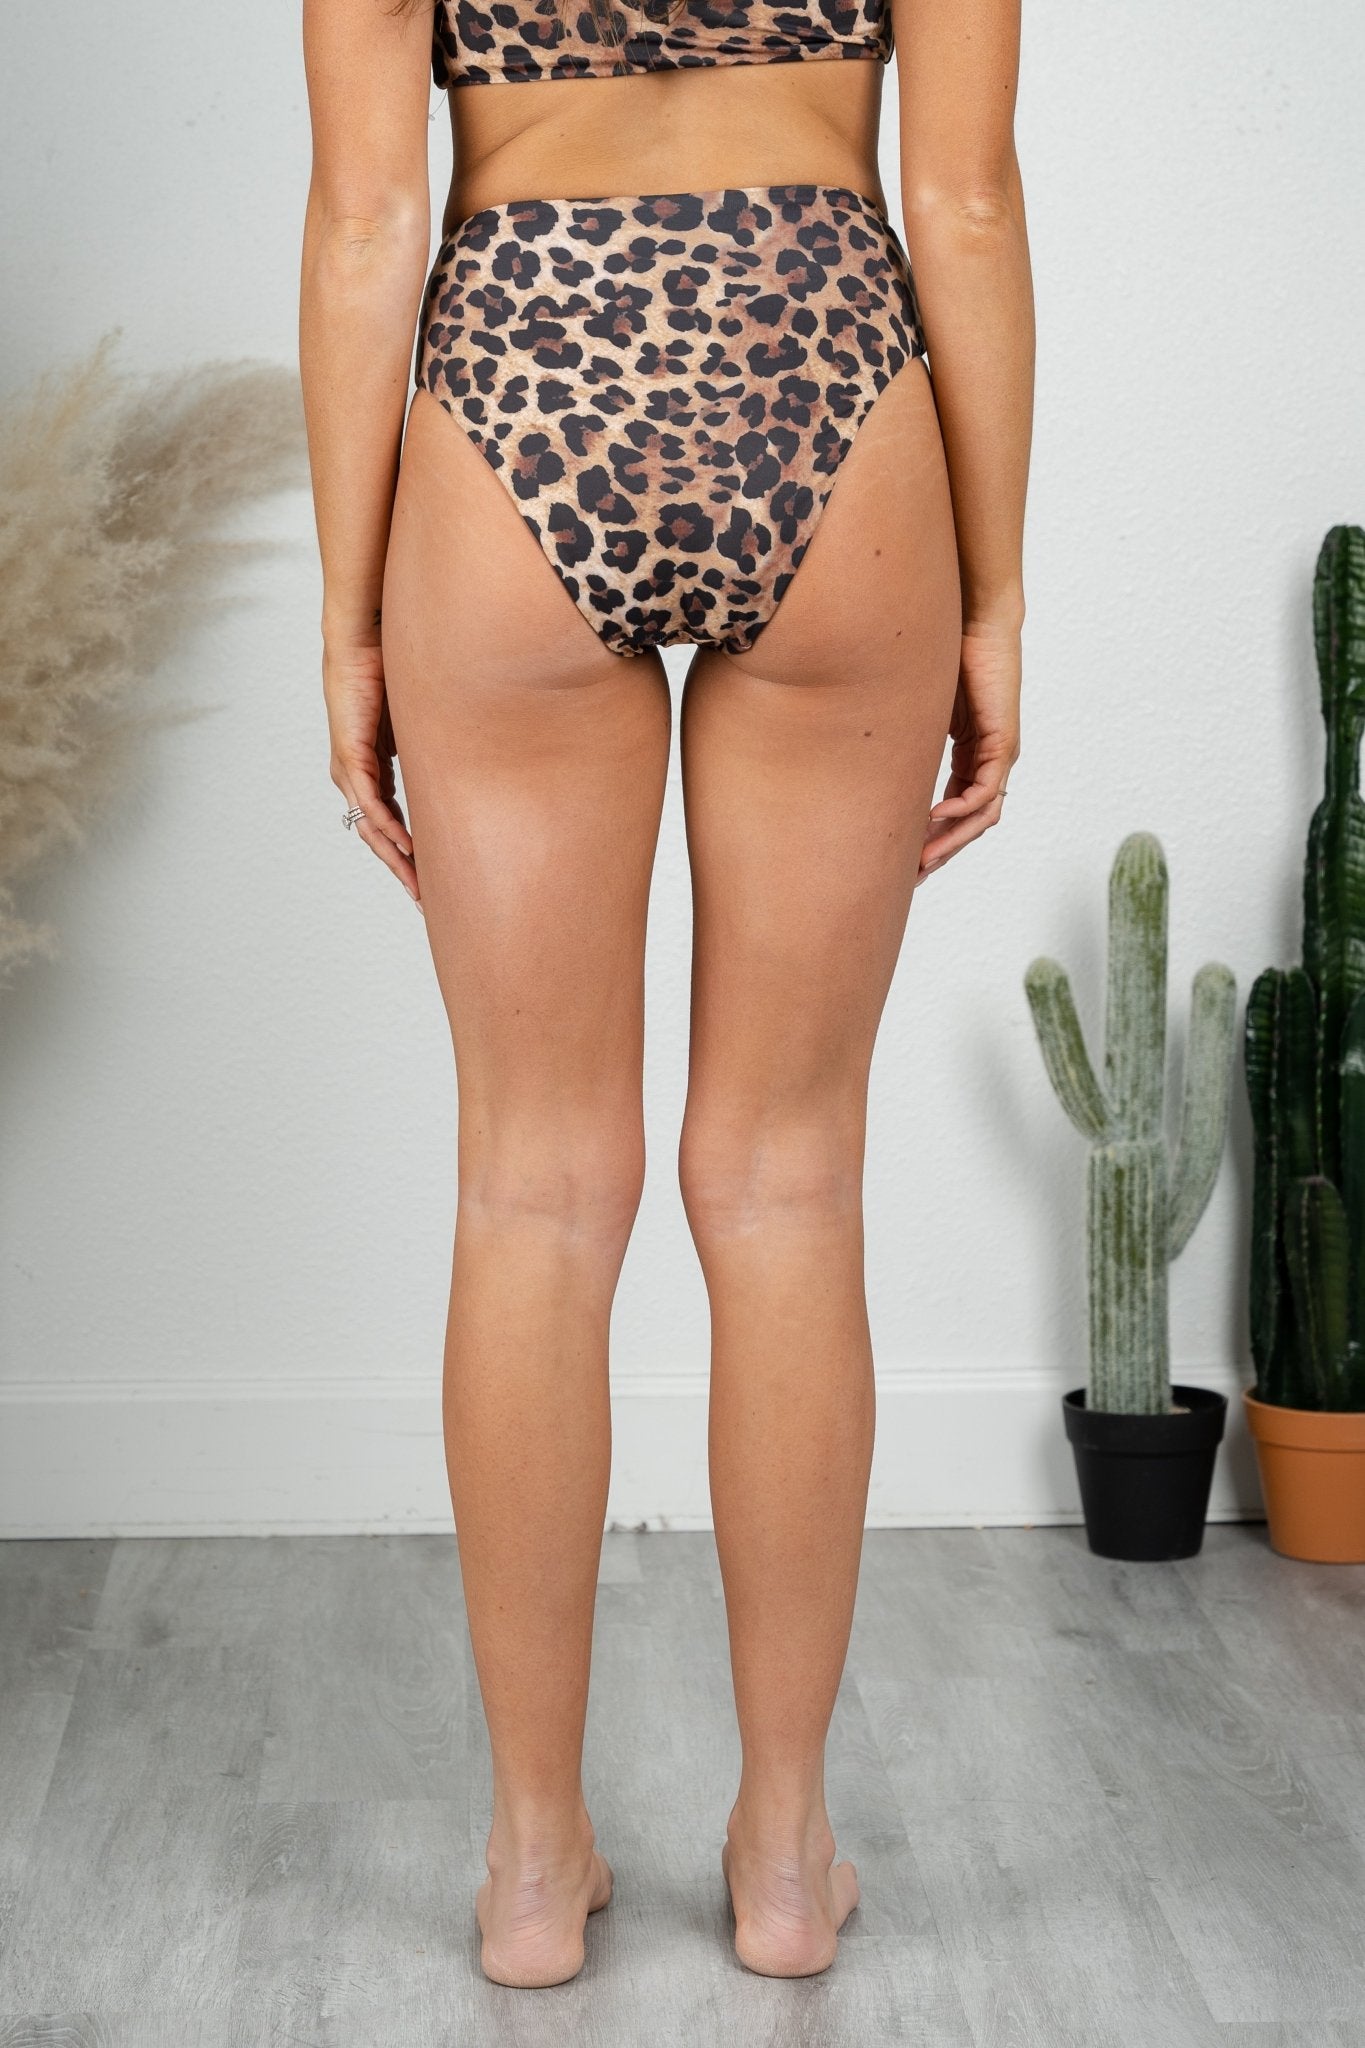 Leopard print swim bottom - Unique swimsuit - Stylish Swimsuits at Lush Fashion Lounge Boutique in Oklahoma City